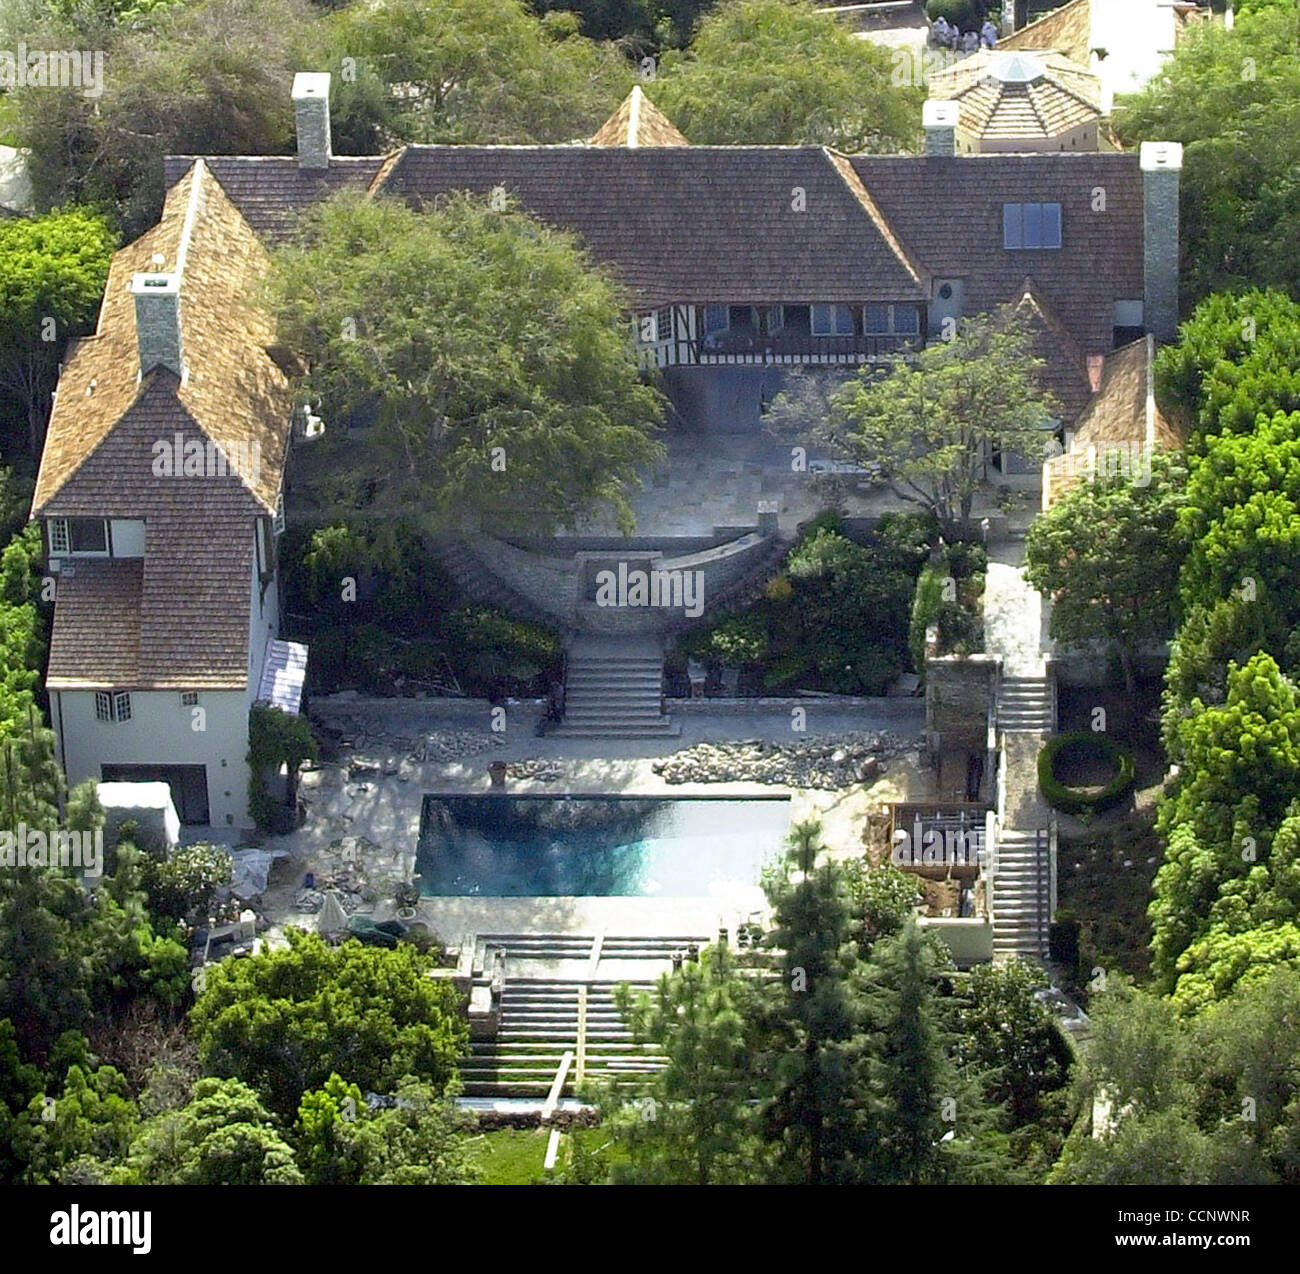 Brad Pitt Home: Inside the Actor's Properties